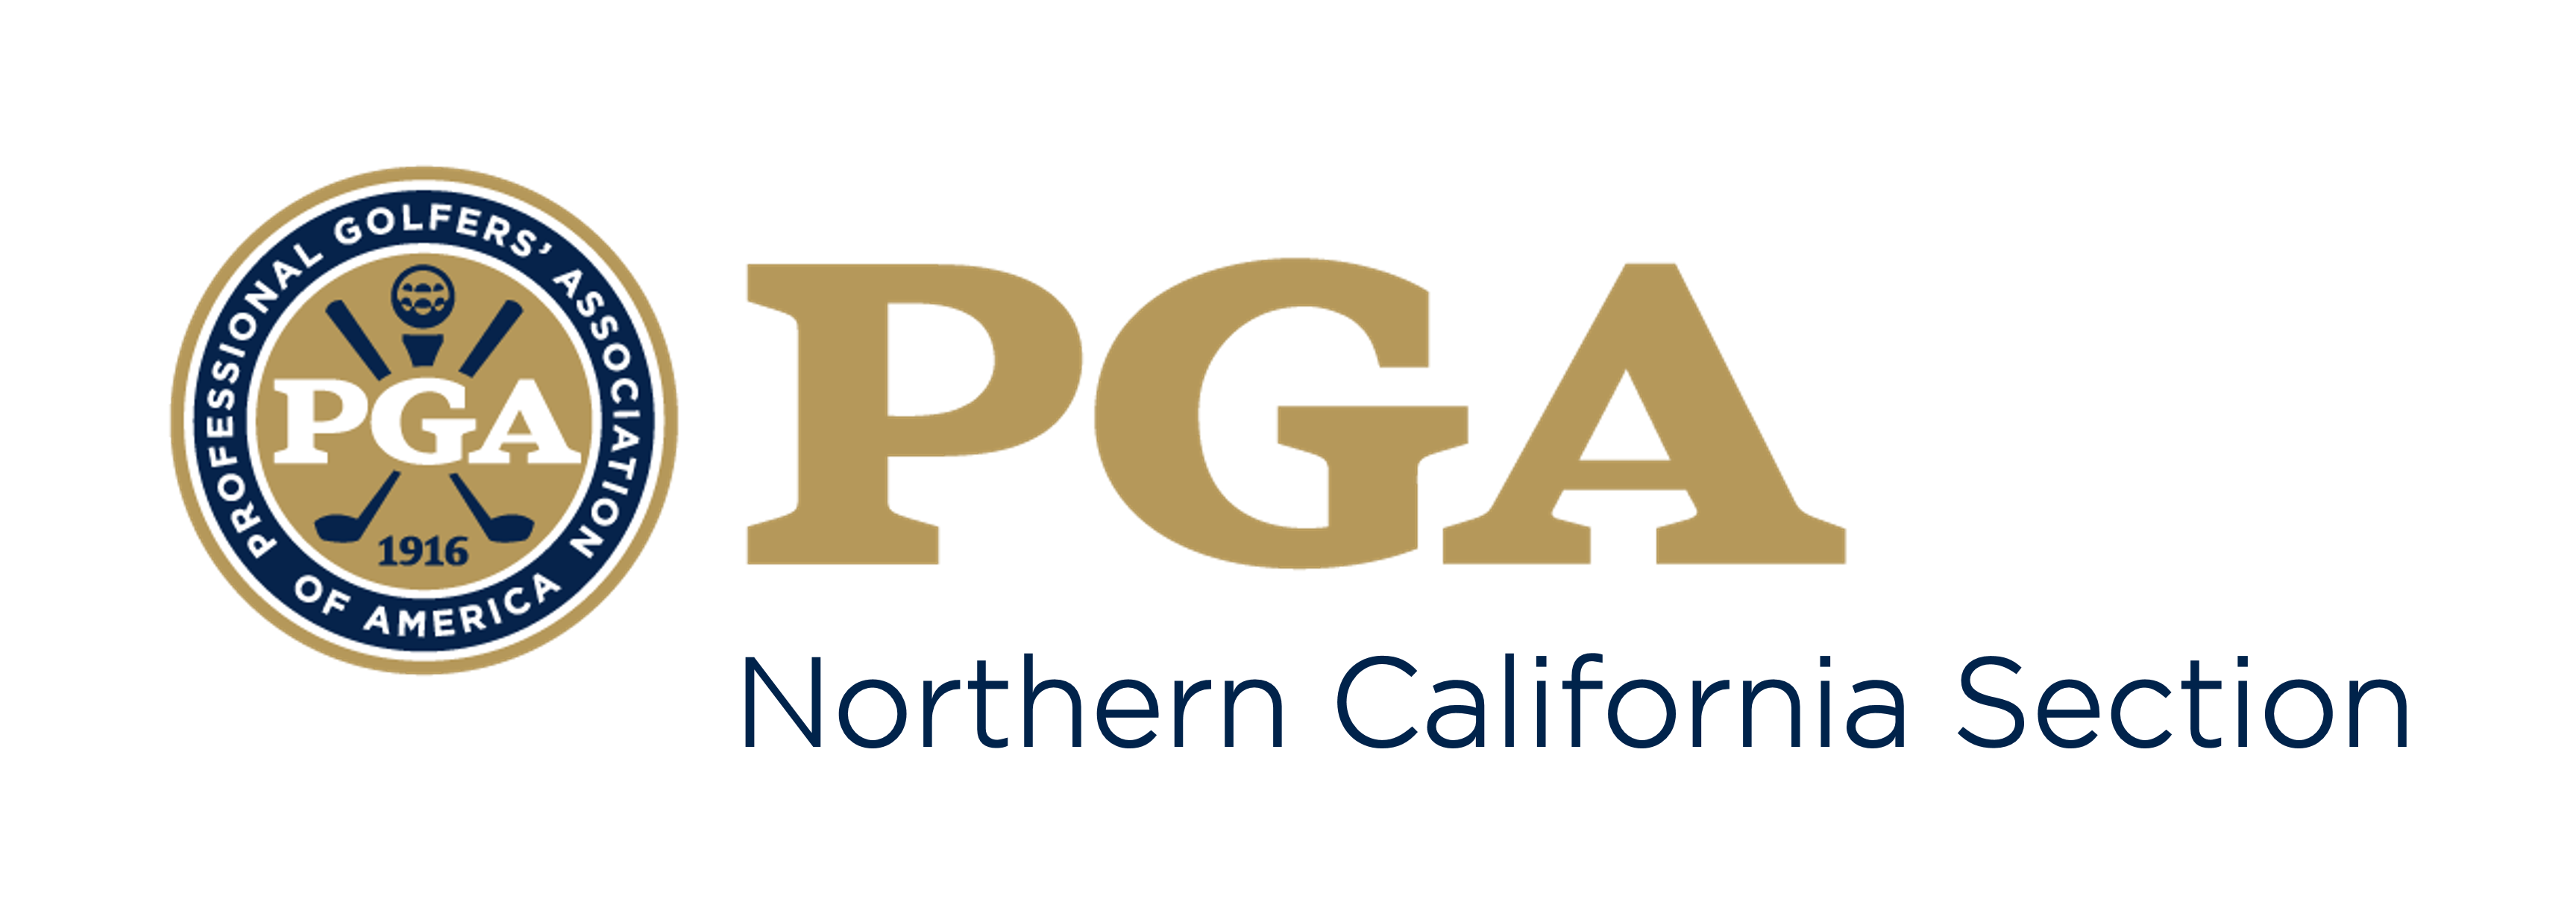 Northern California PGA Hole In One Program